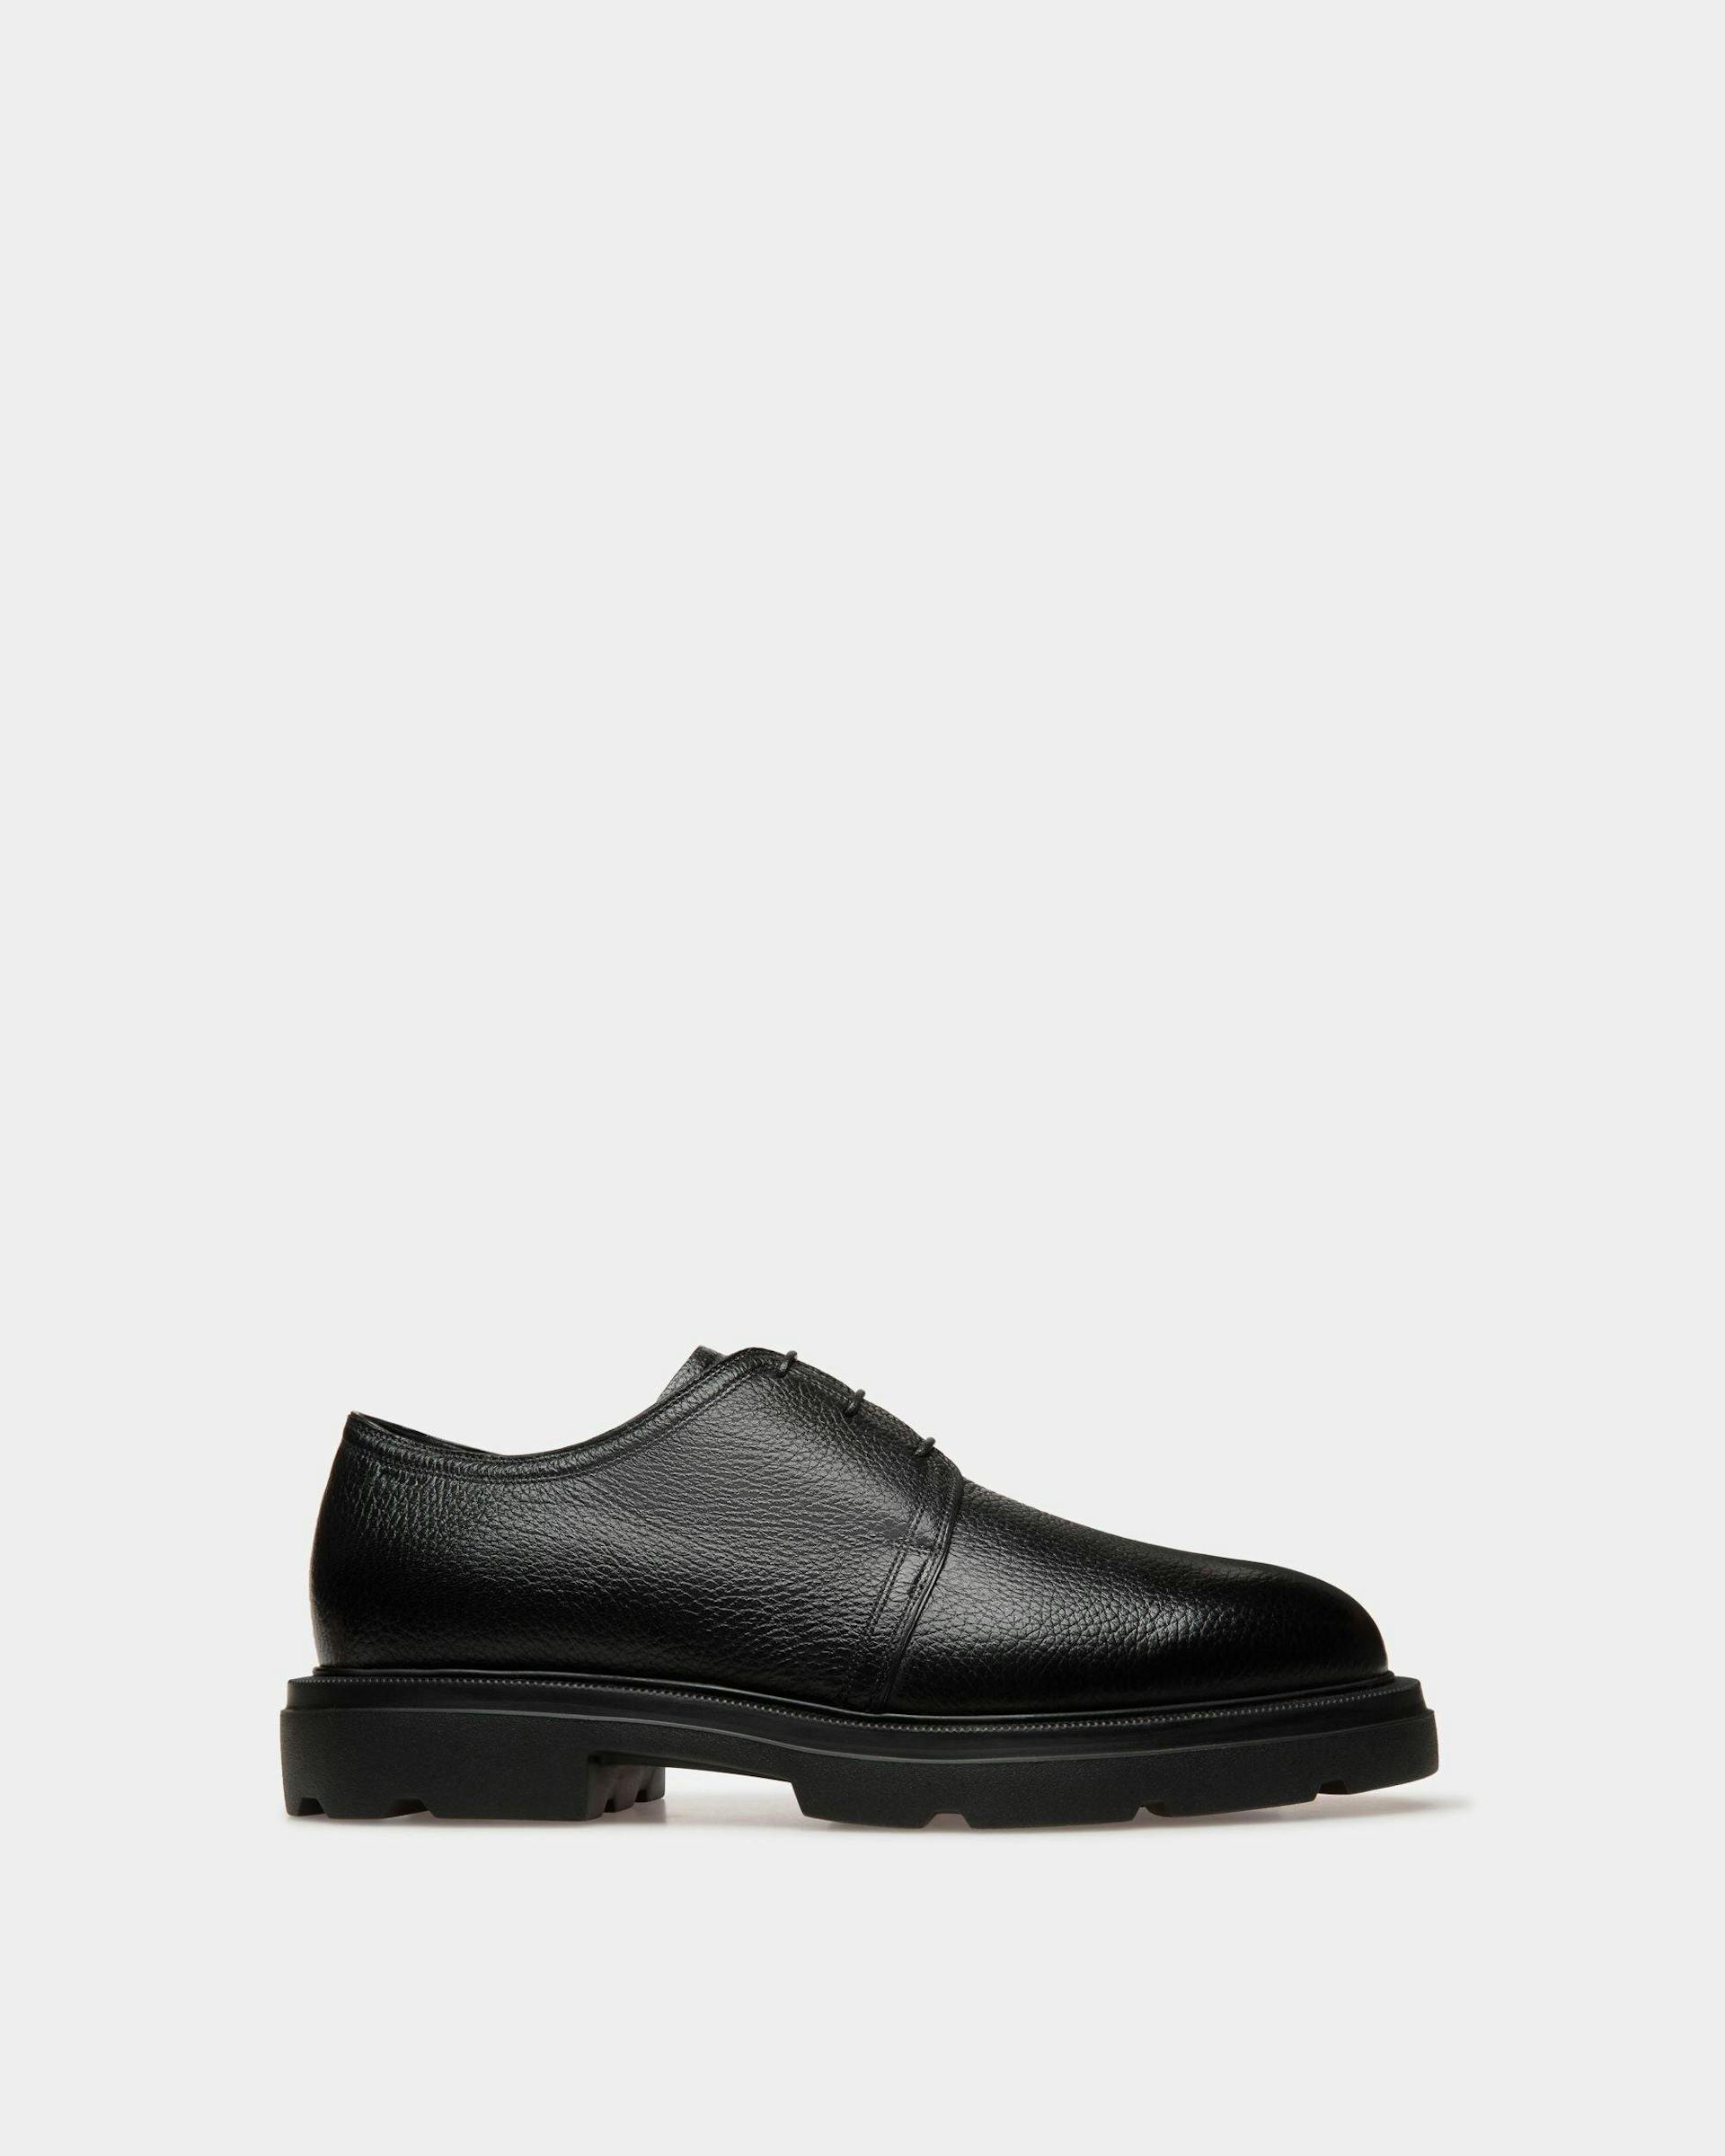 Zurich Derby Shoes In Black Leather - Men's - Bally - 01